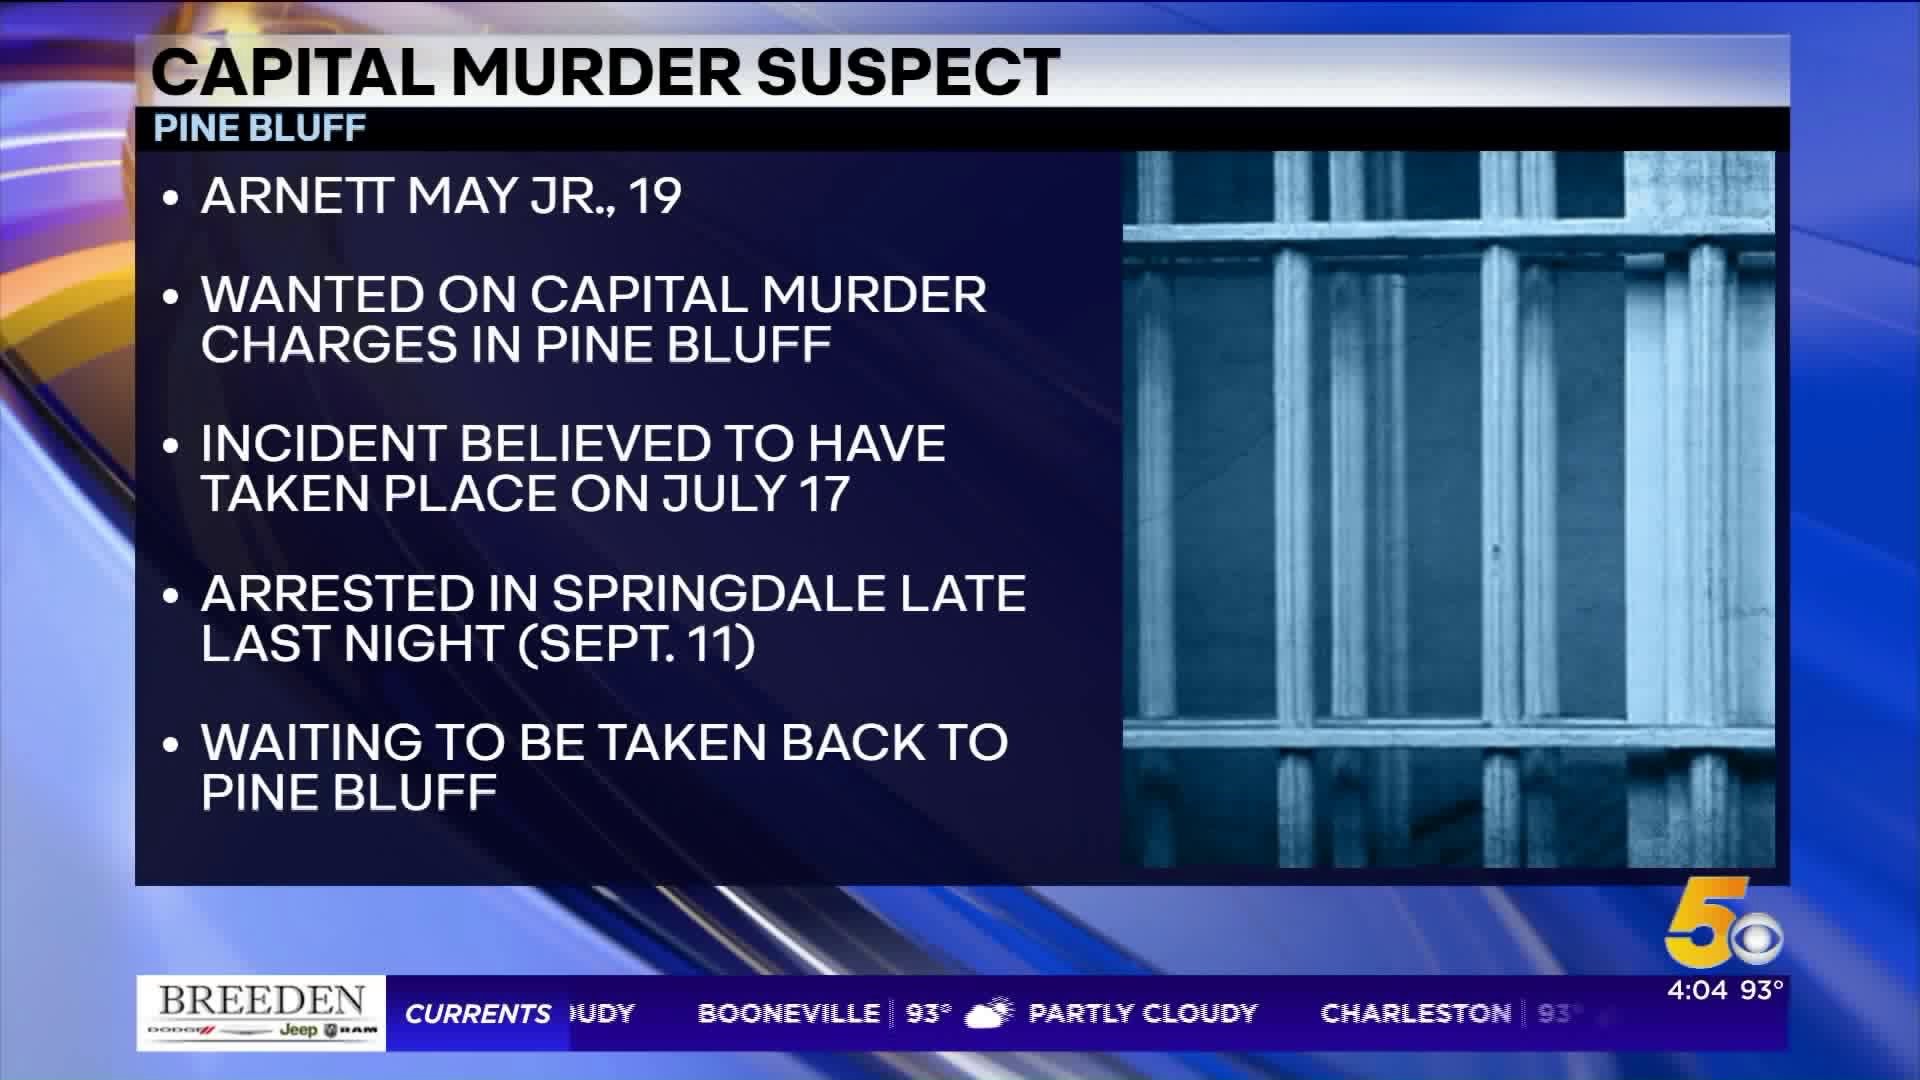 Pine Bluff Capital Murder Suspect Arrested In Springdale